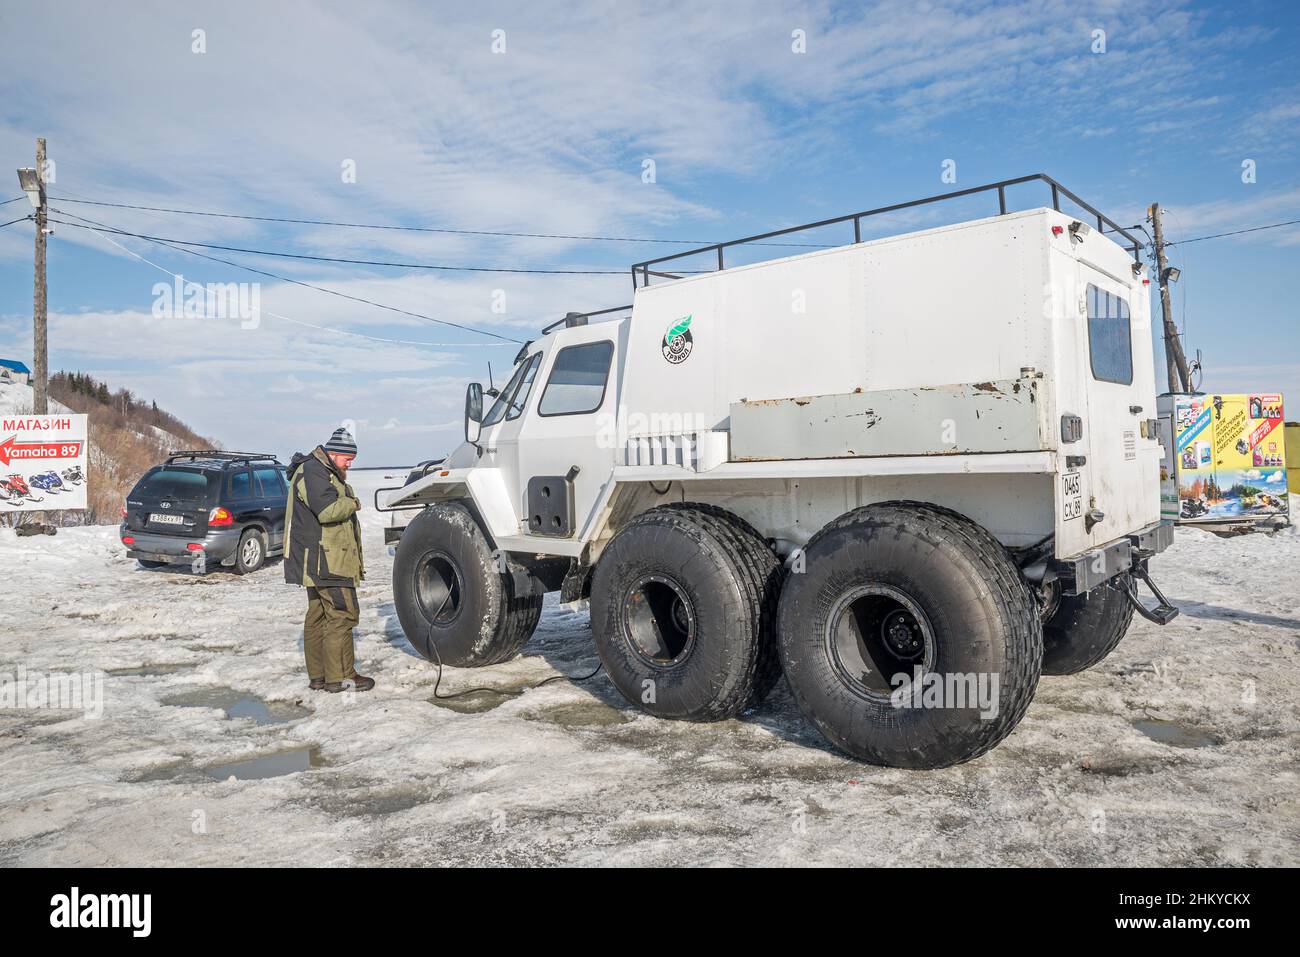 A trekol (russian all terrain six wheels vehicle) in the snow, tundra of Yamalo-Nenets Autonomous Orkug, Russia Stock Photo